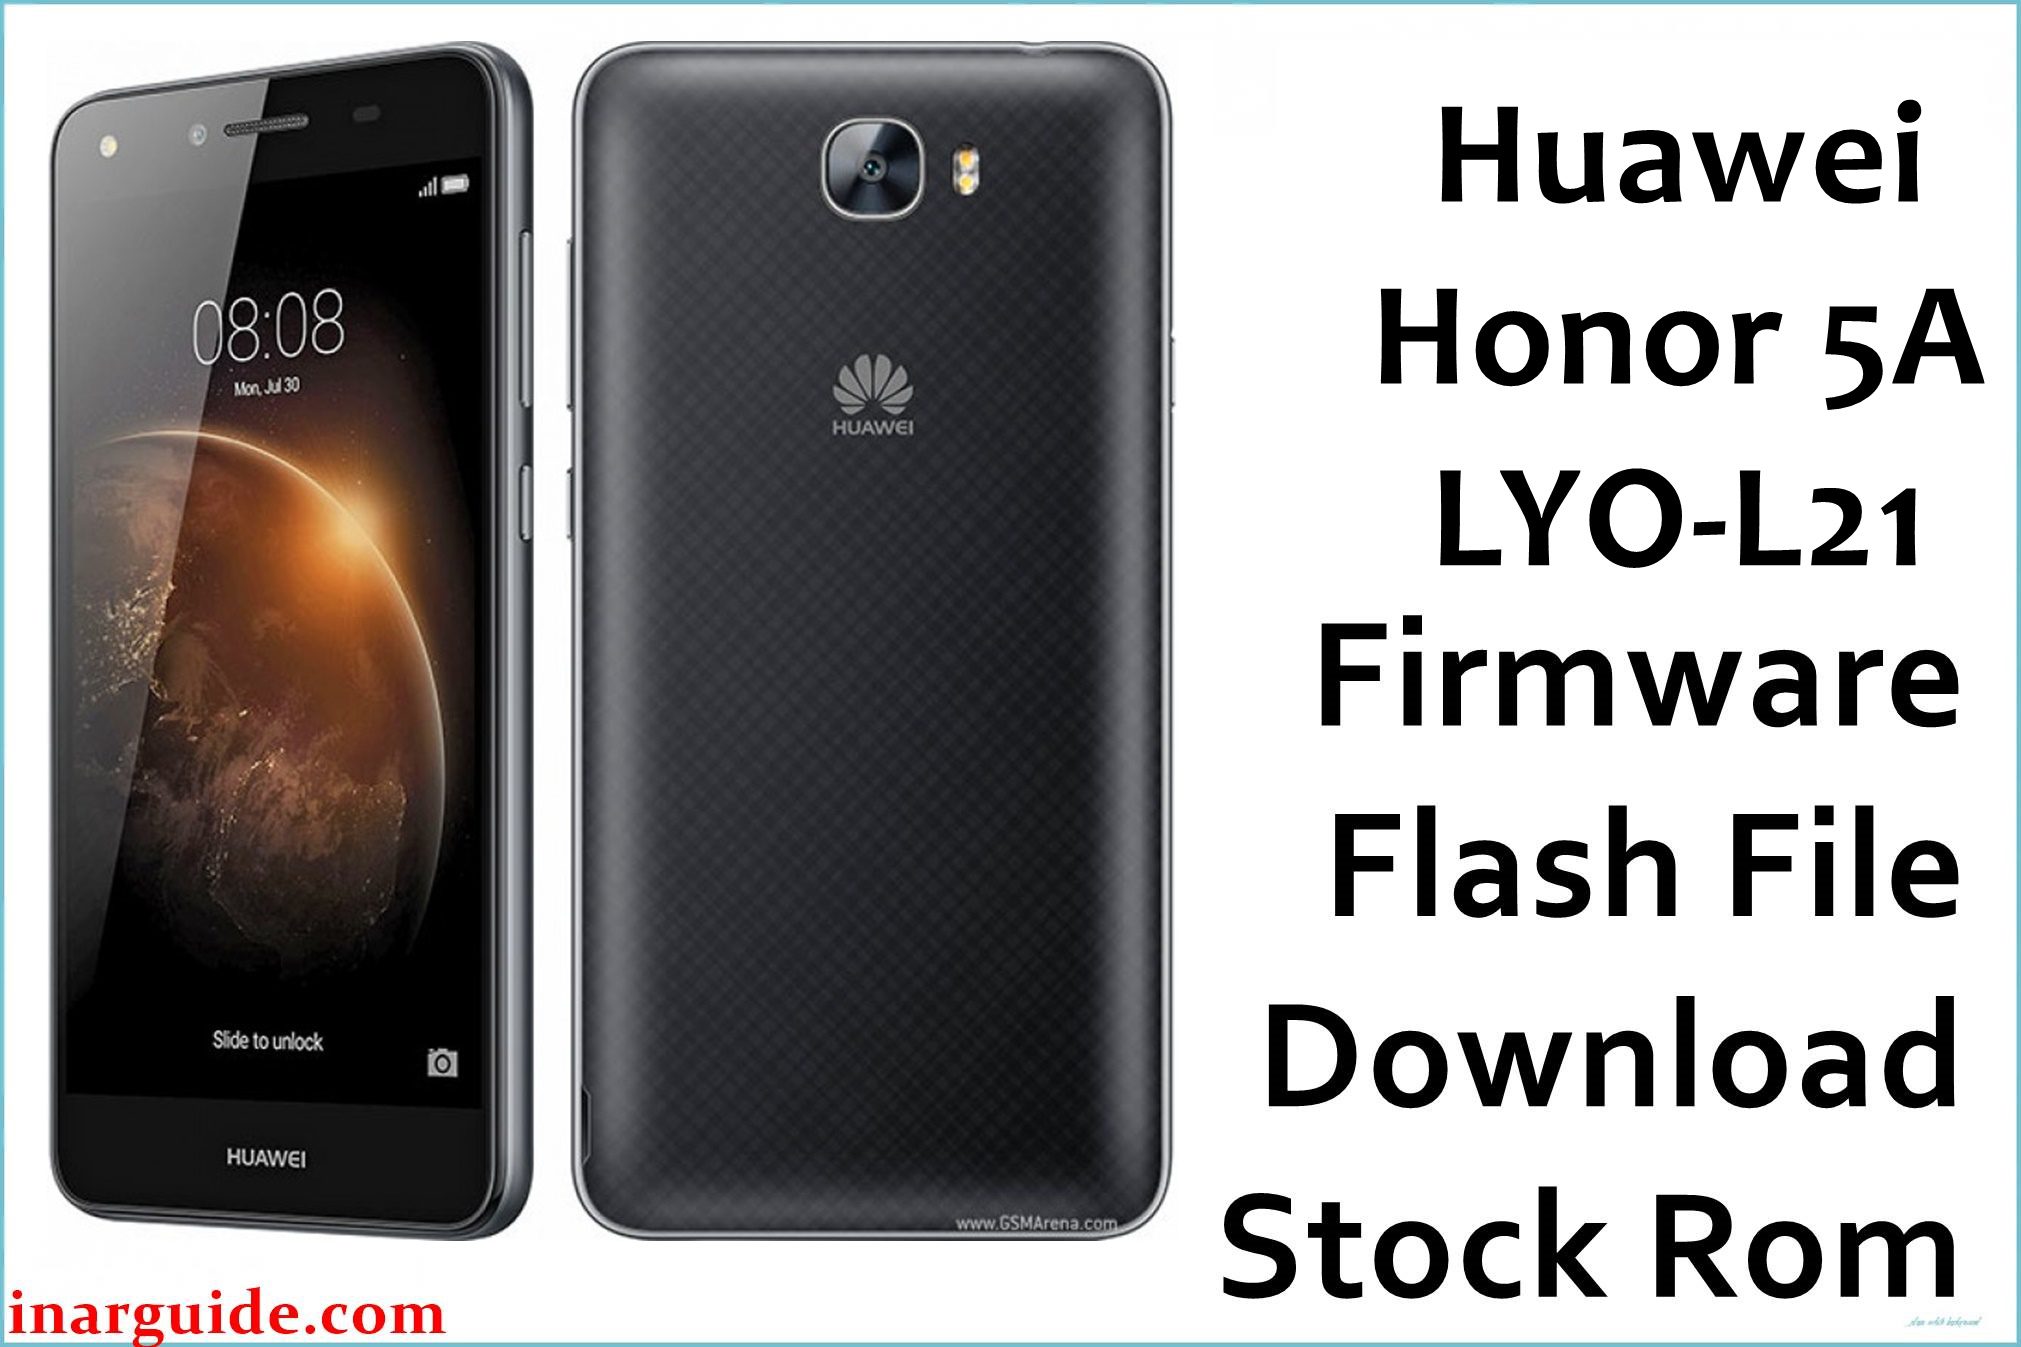 Huawei Honor 5A LYO L21